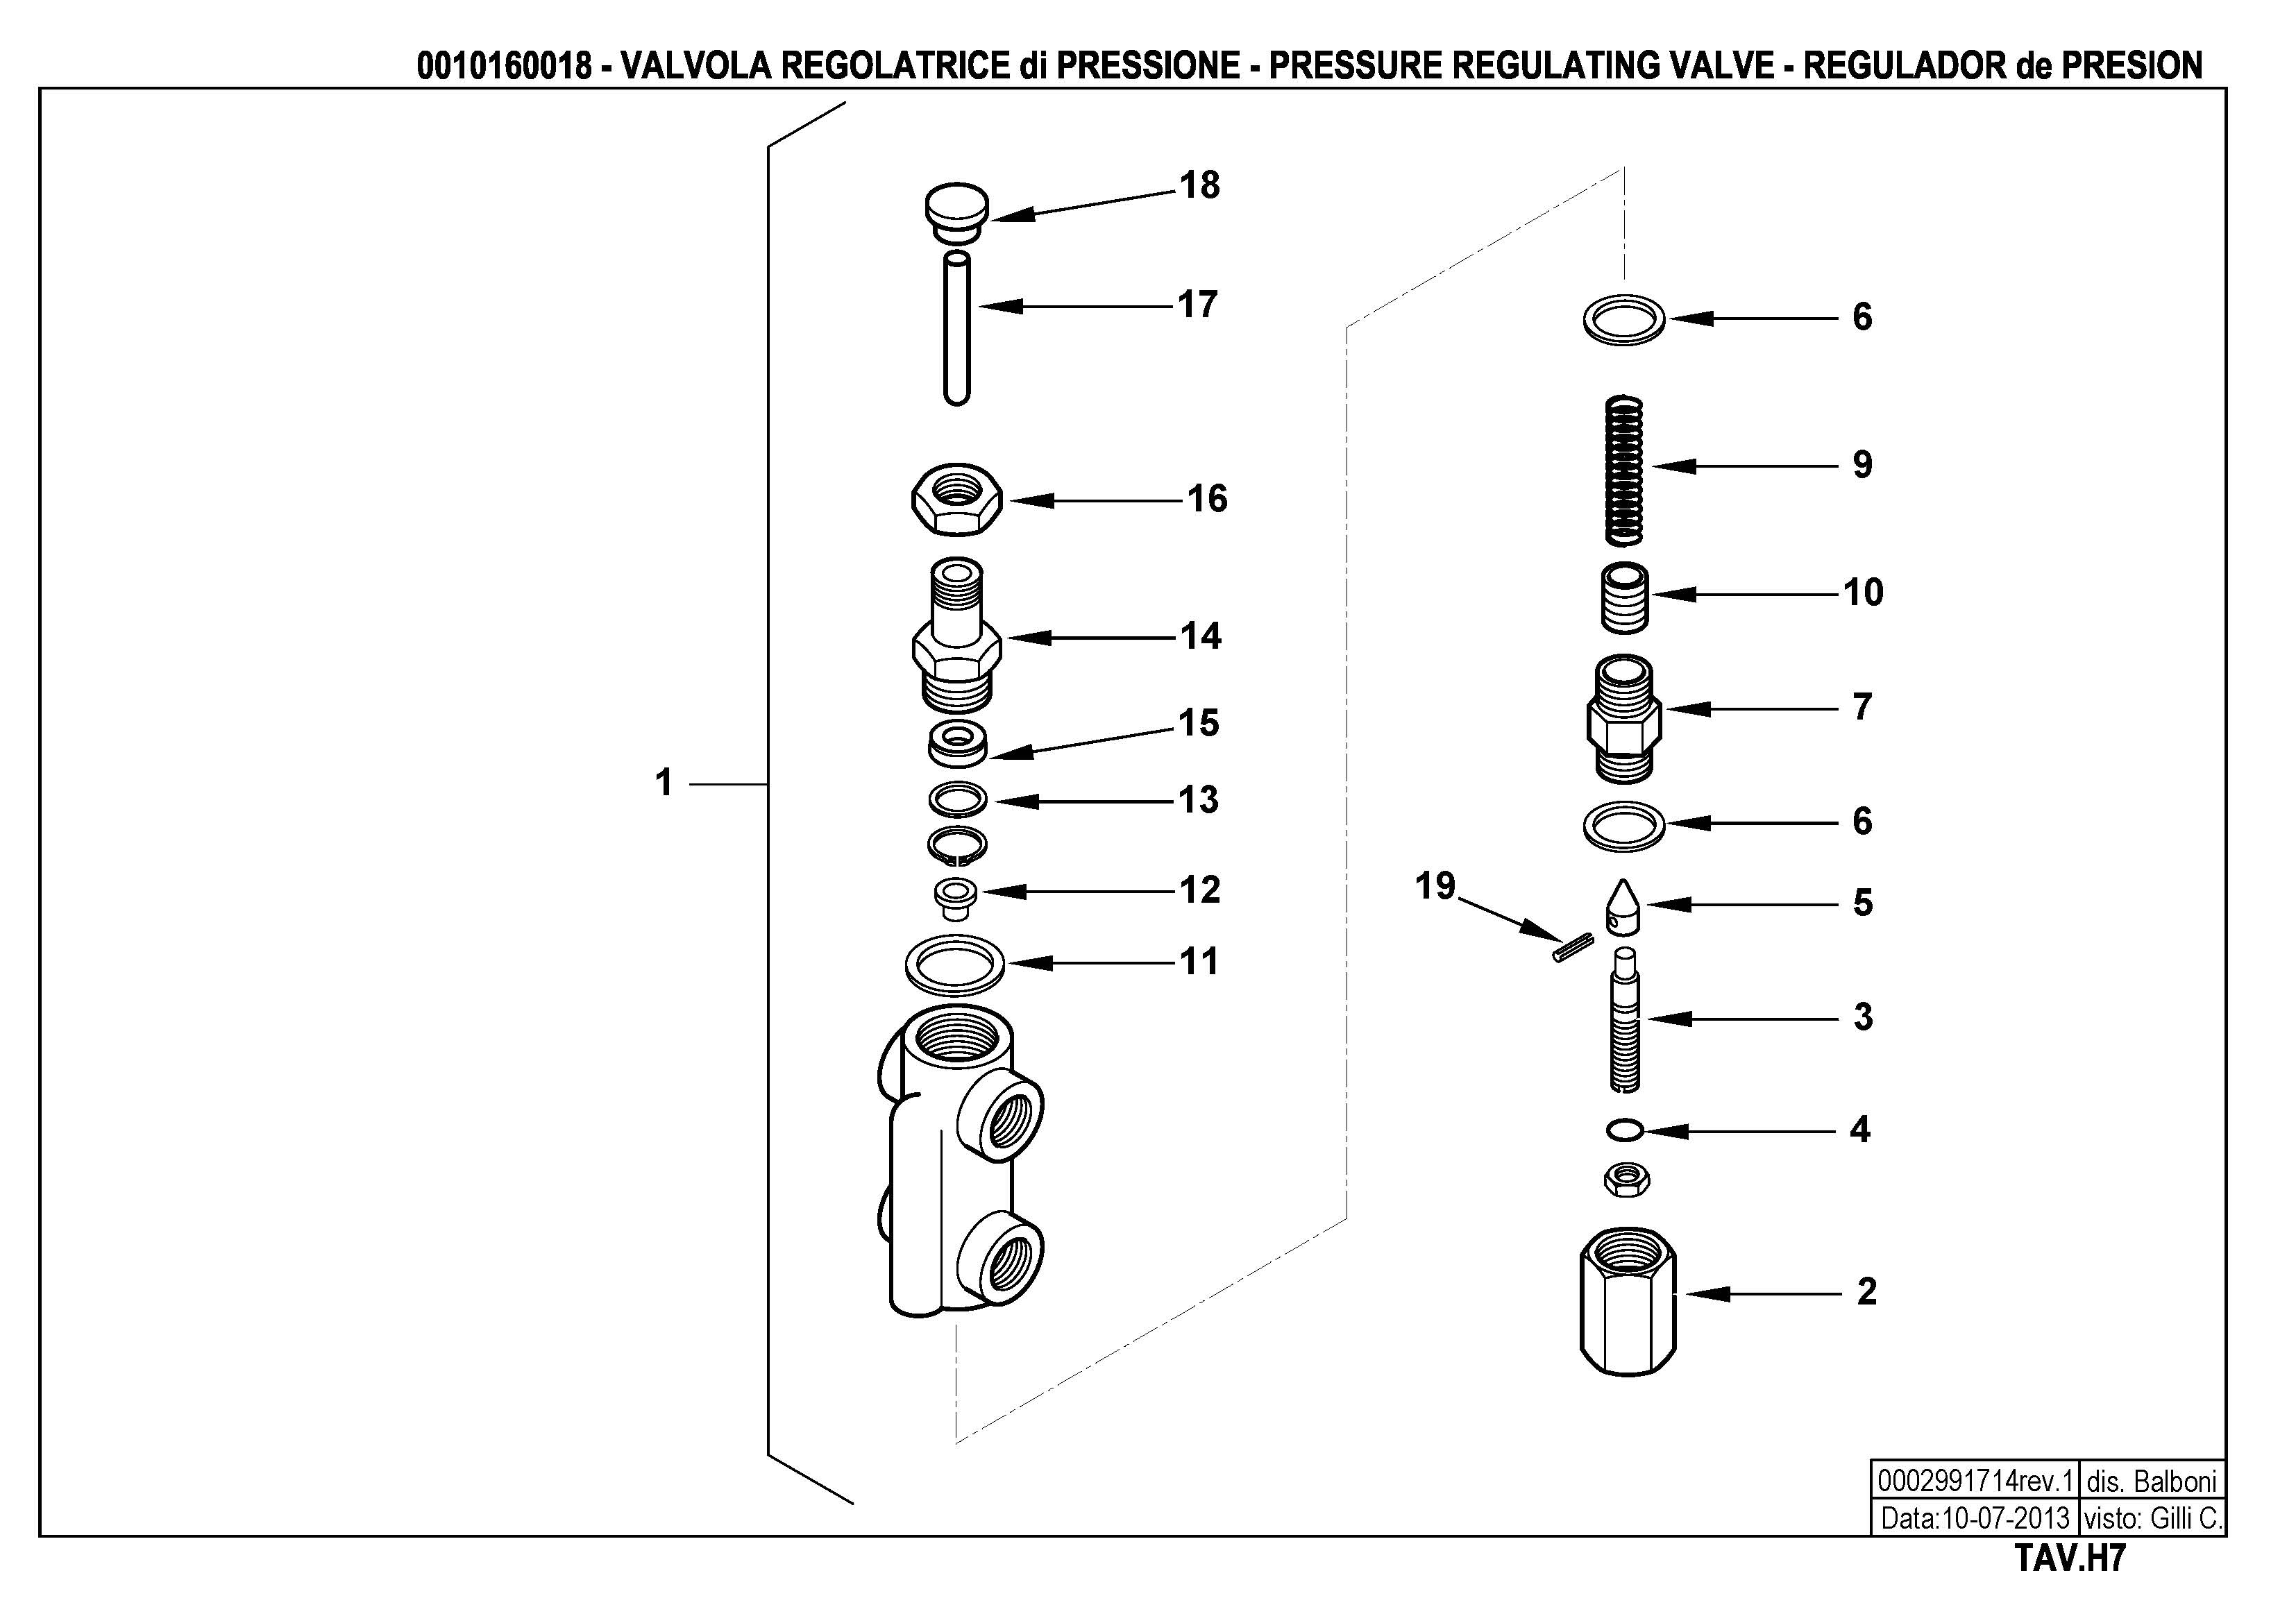 Регулятор давления жидкого топлива H7 10160018 1 20130710